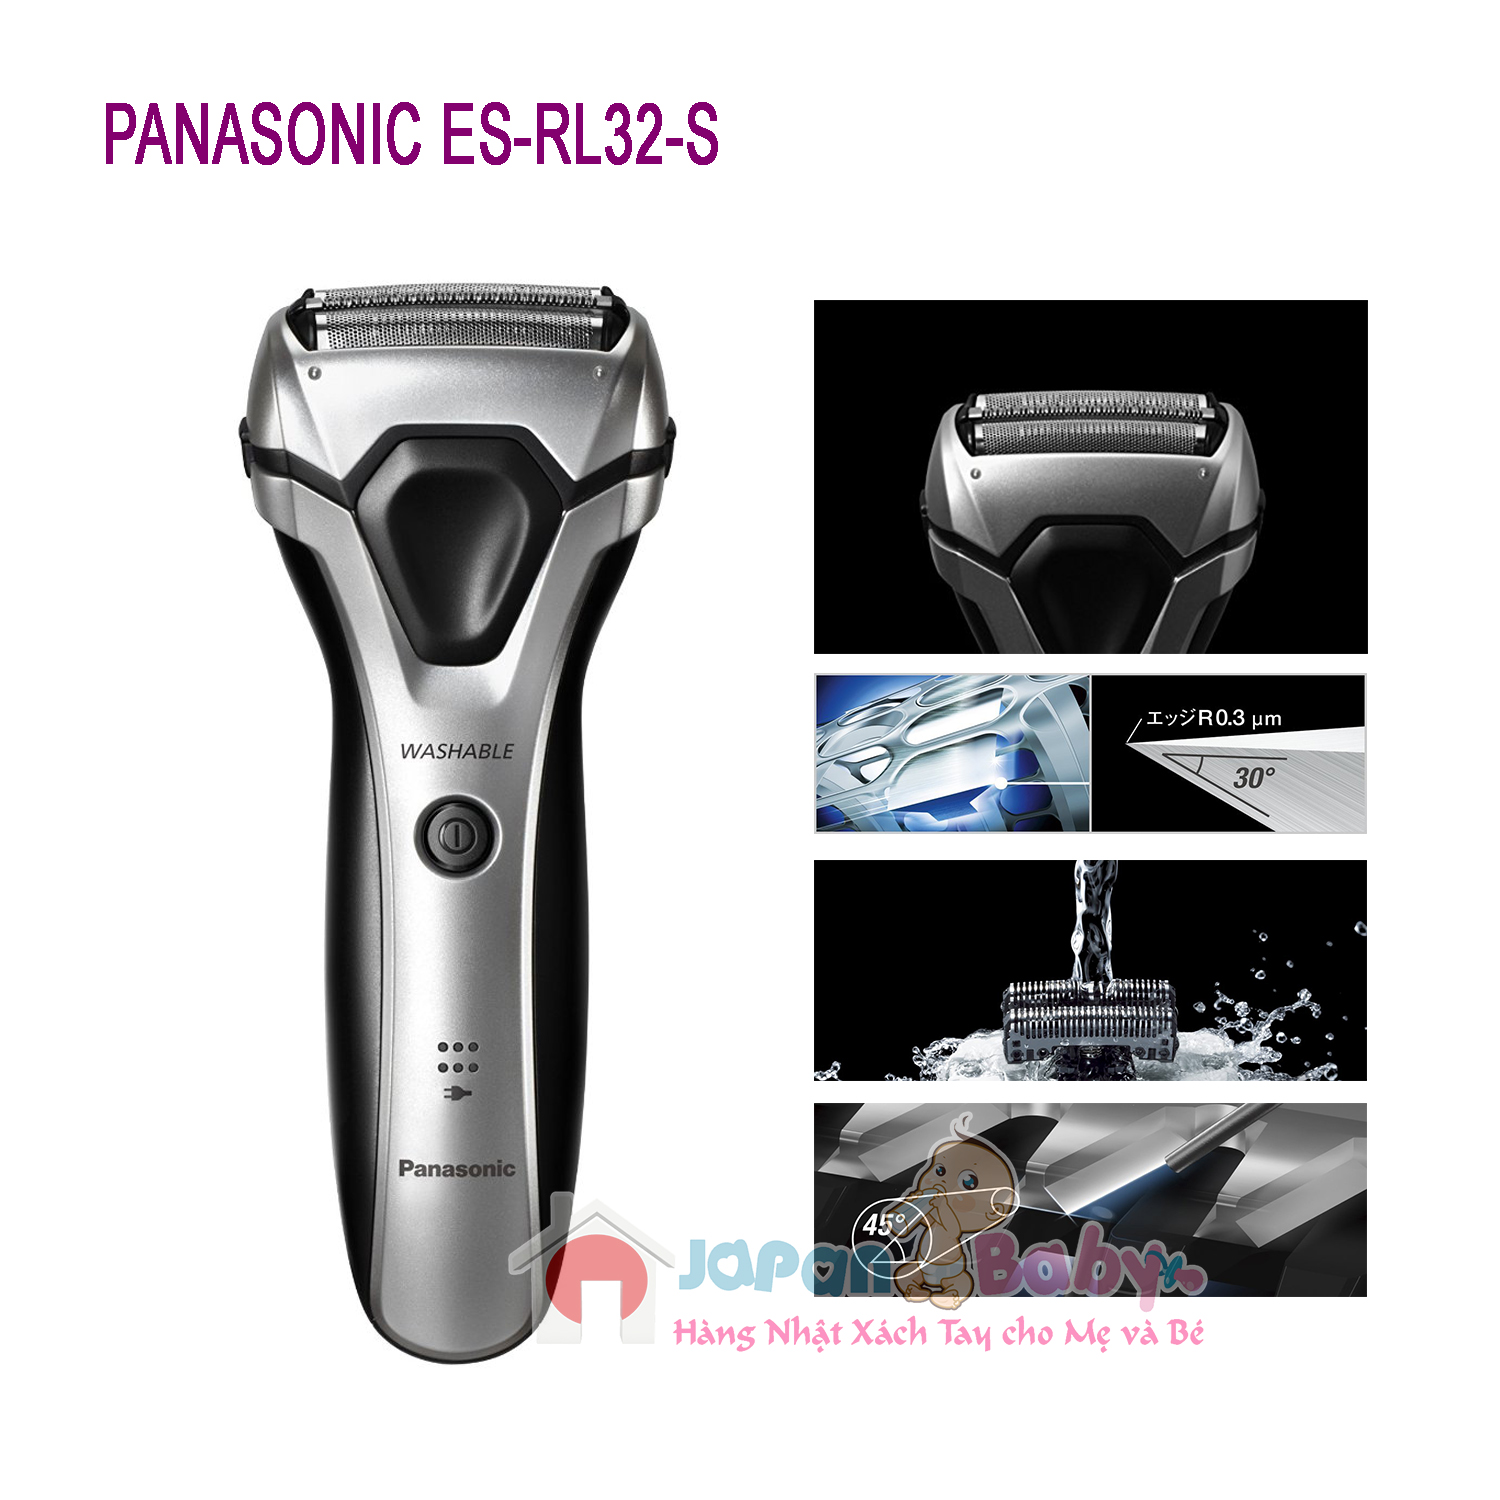 Panasonic ES-RL32-S